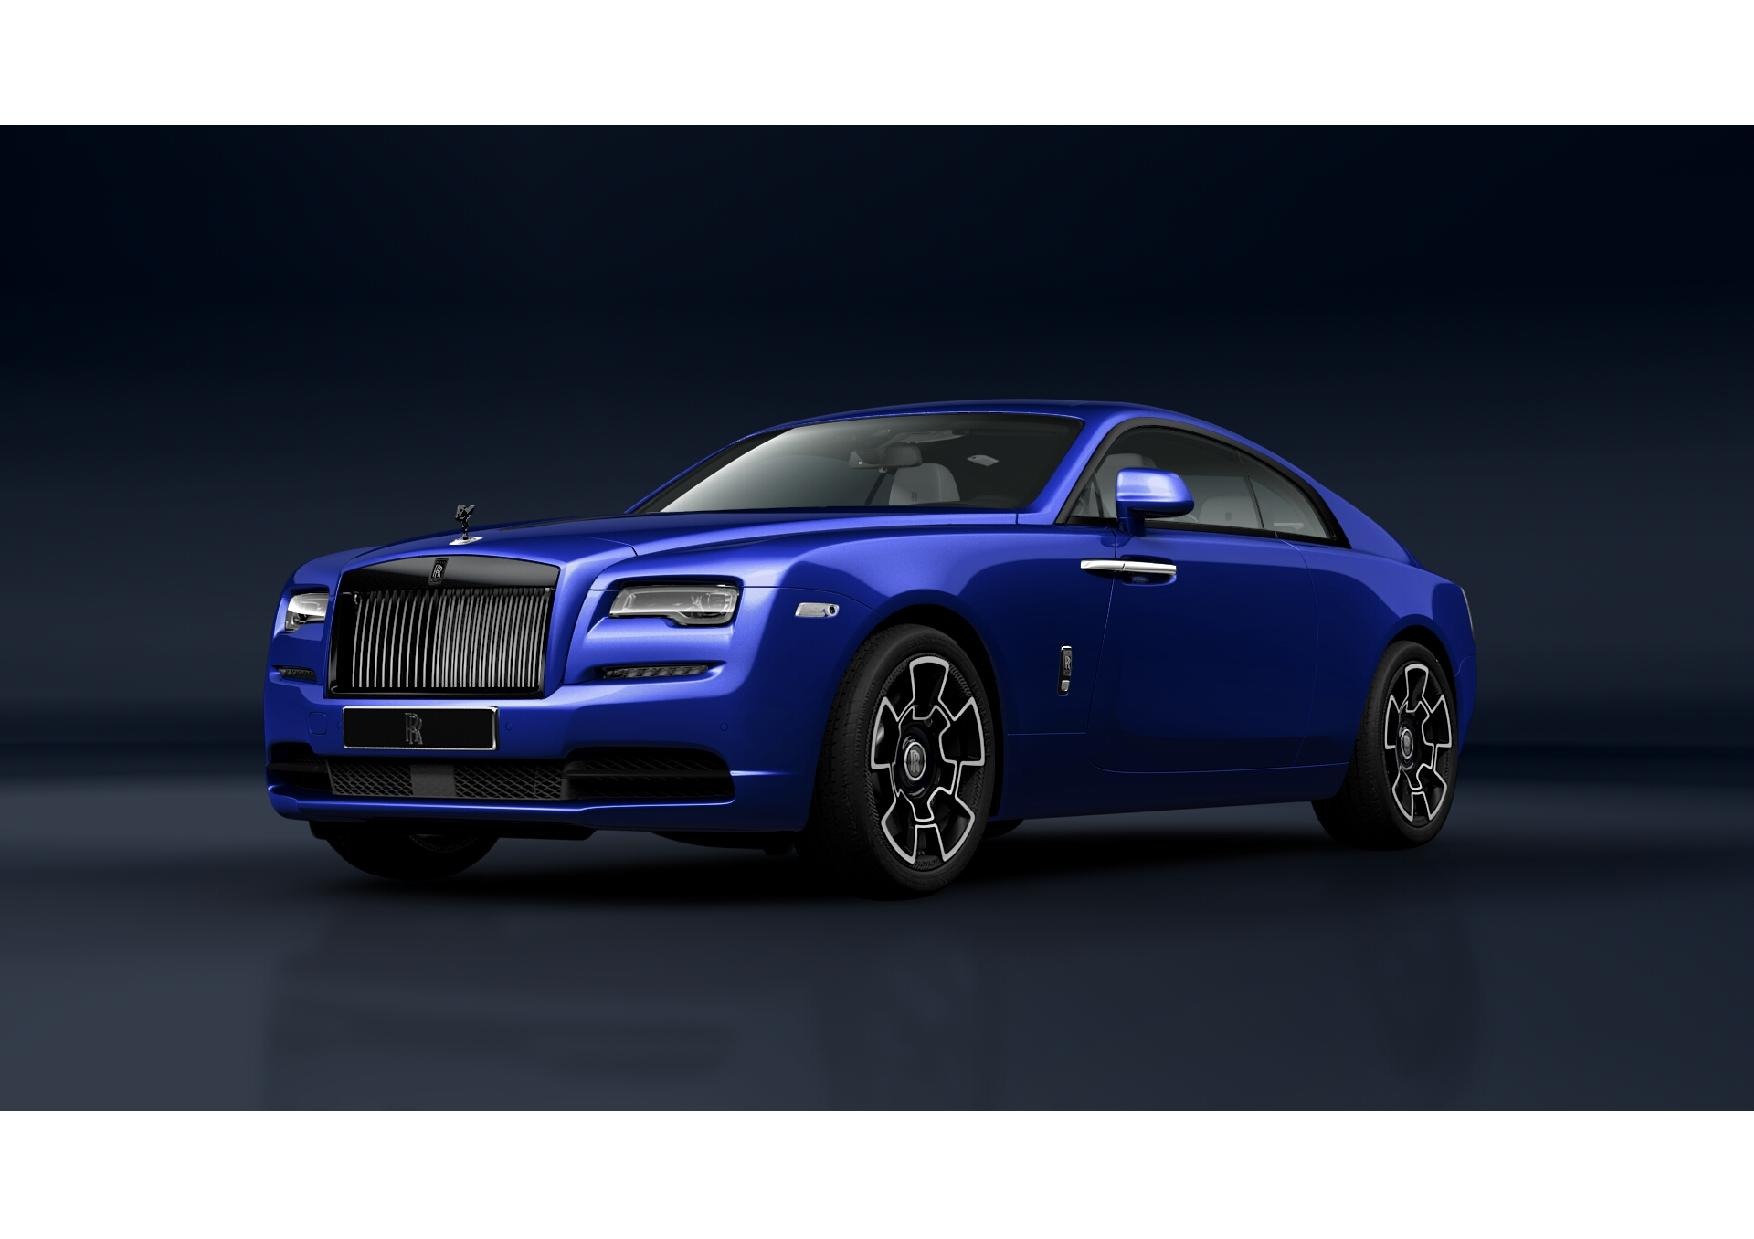 Test Driven 2014 Rolls Royce Wraith Nicks Take 9510  Mind Over Motor